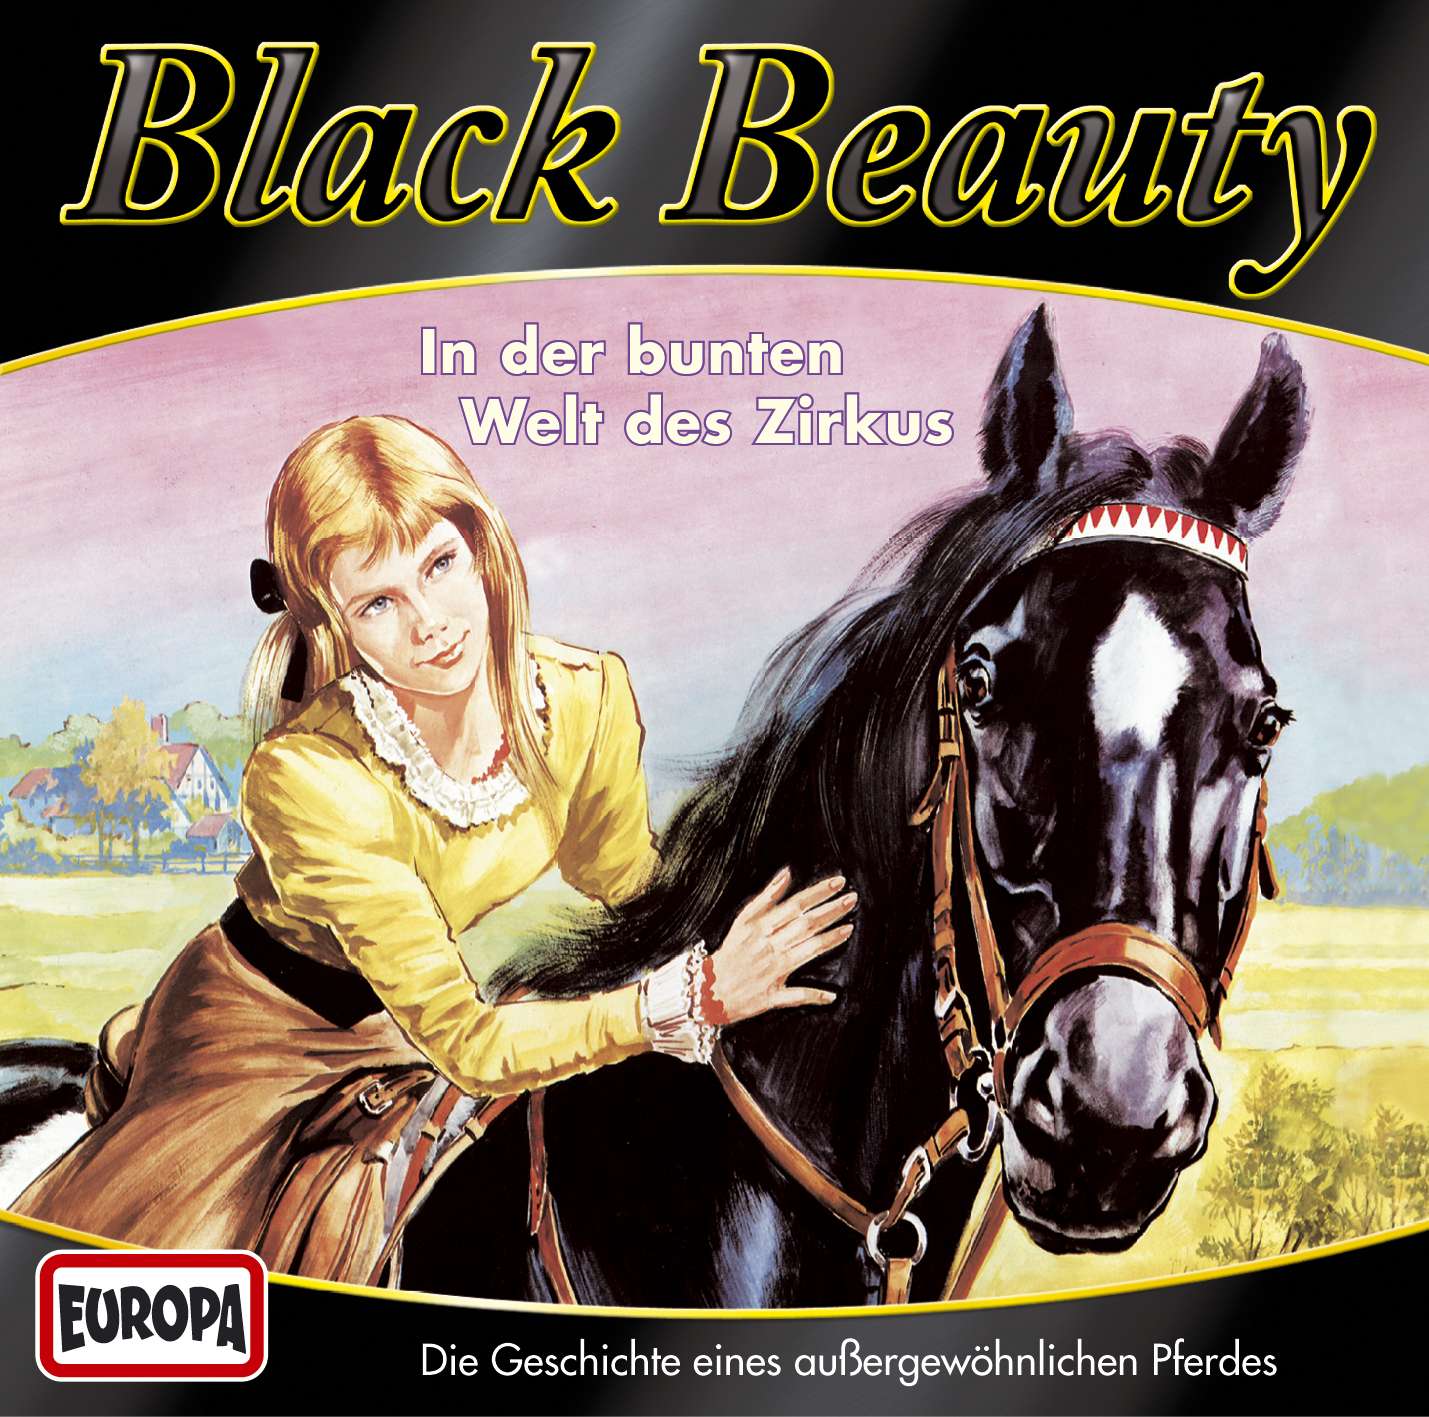 Black Beauty: Black Beauty - In der bunten Welt des Zirkus